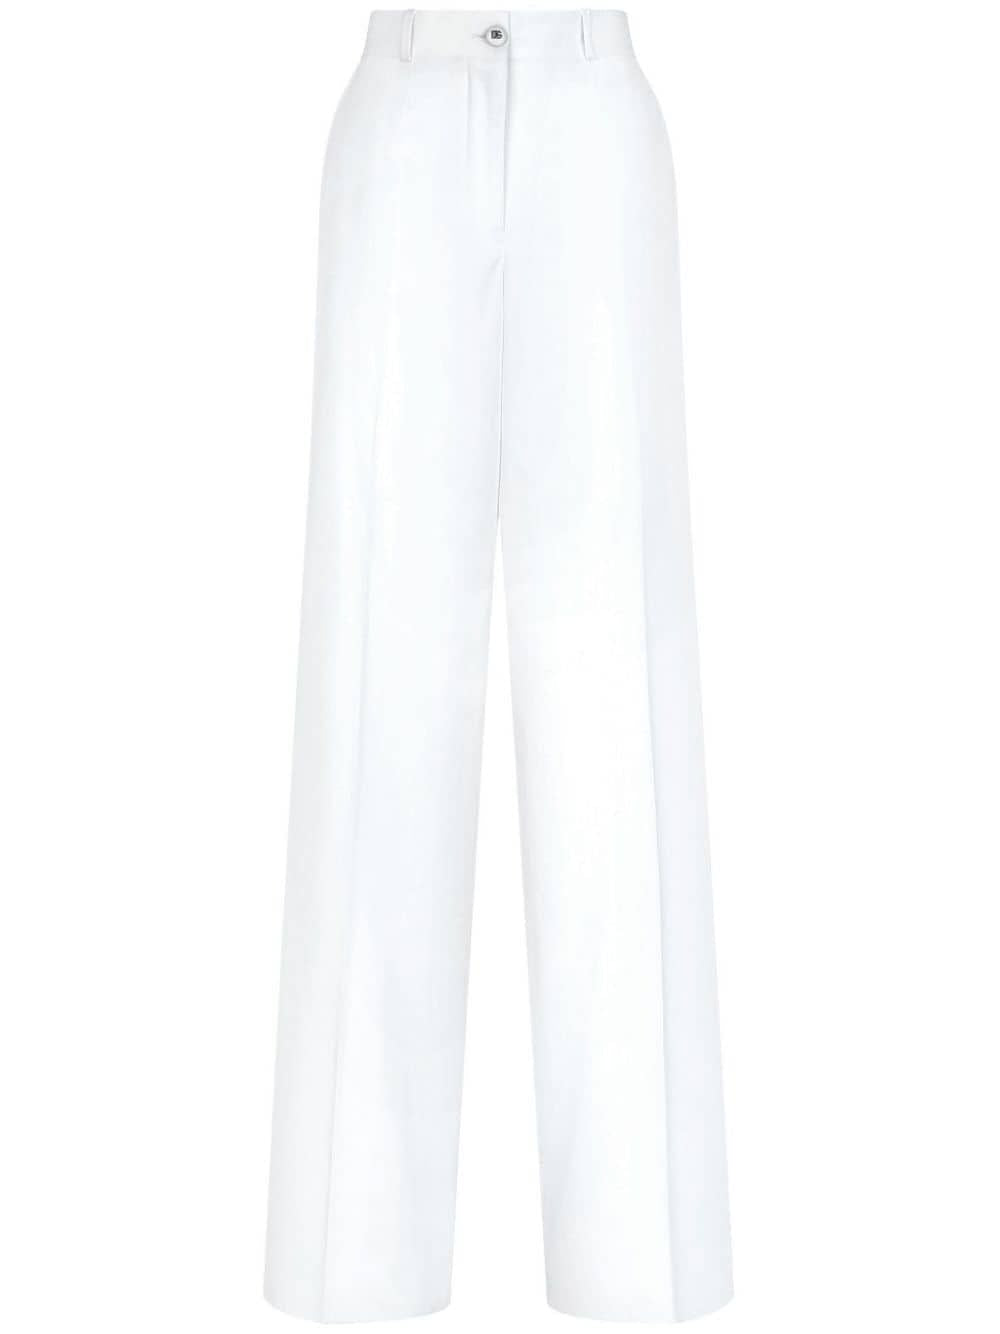 DOLCE & GABBANA Classic Cotton Blend Pants for Women